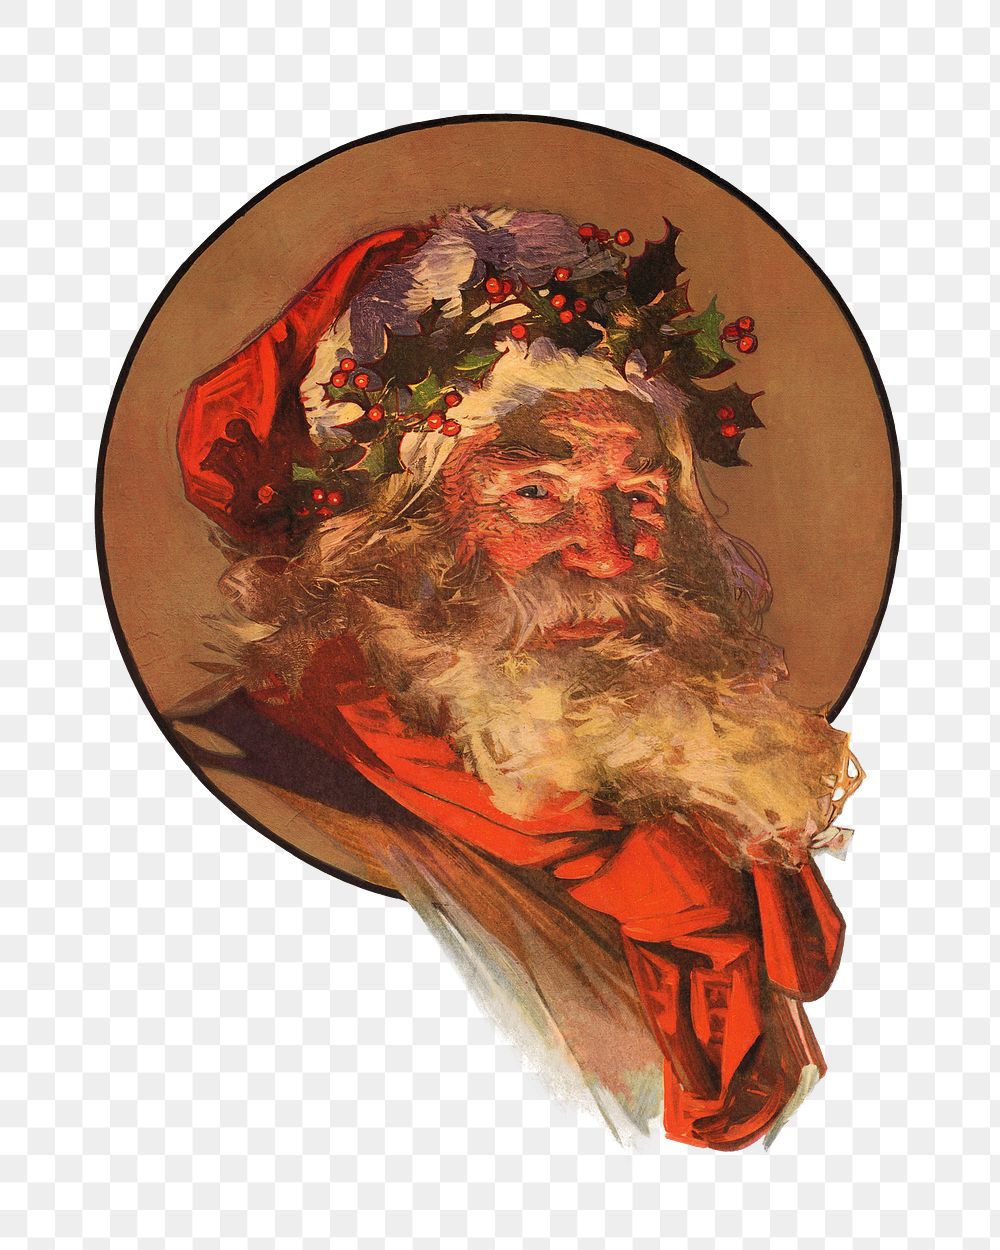 Santa Claus png sticker, vintage portrait on transparent background.  Remastered by rawpixel